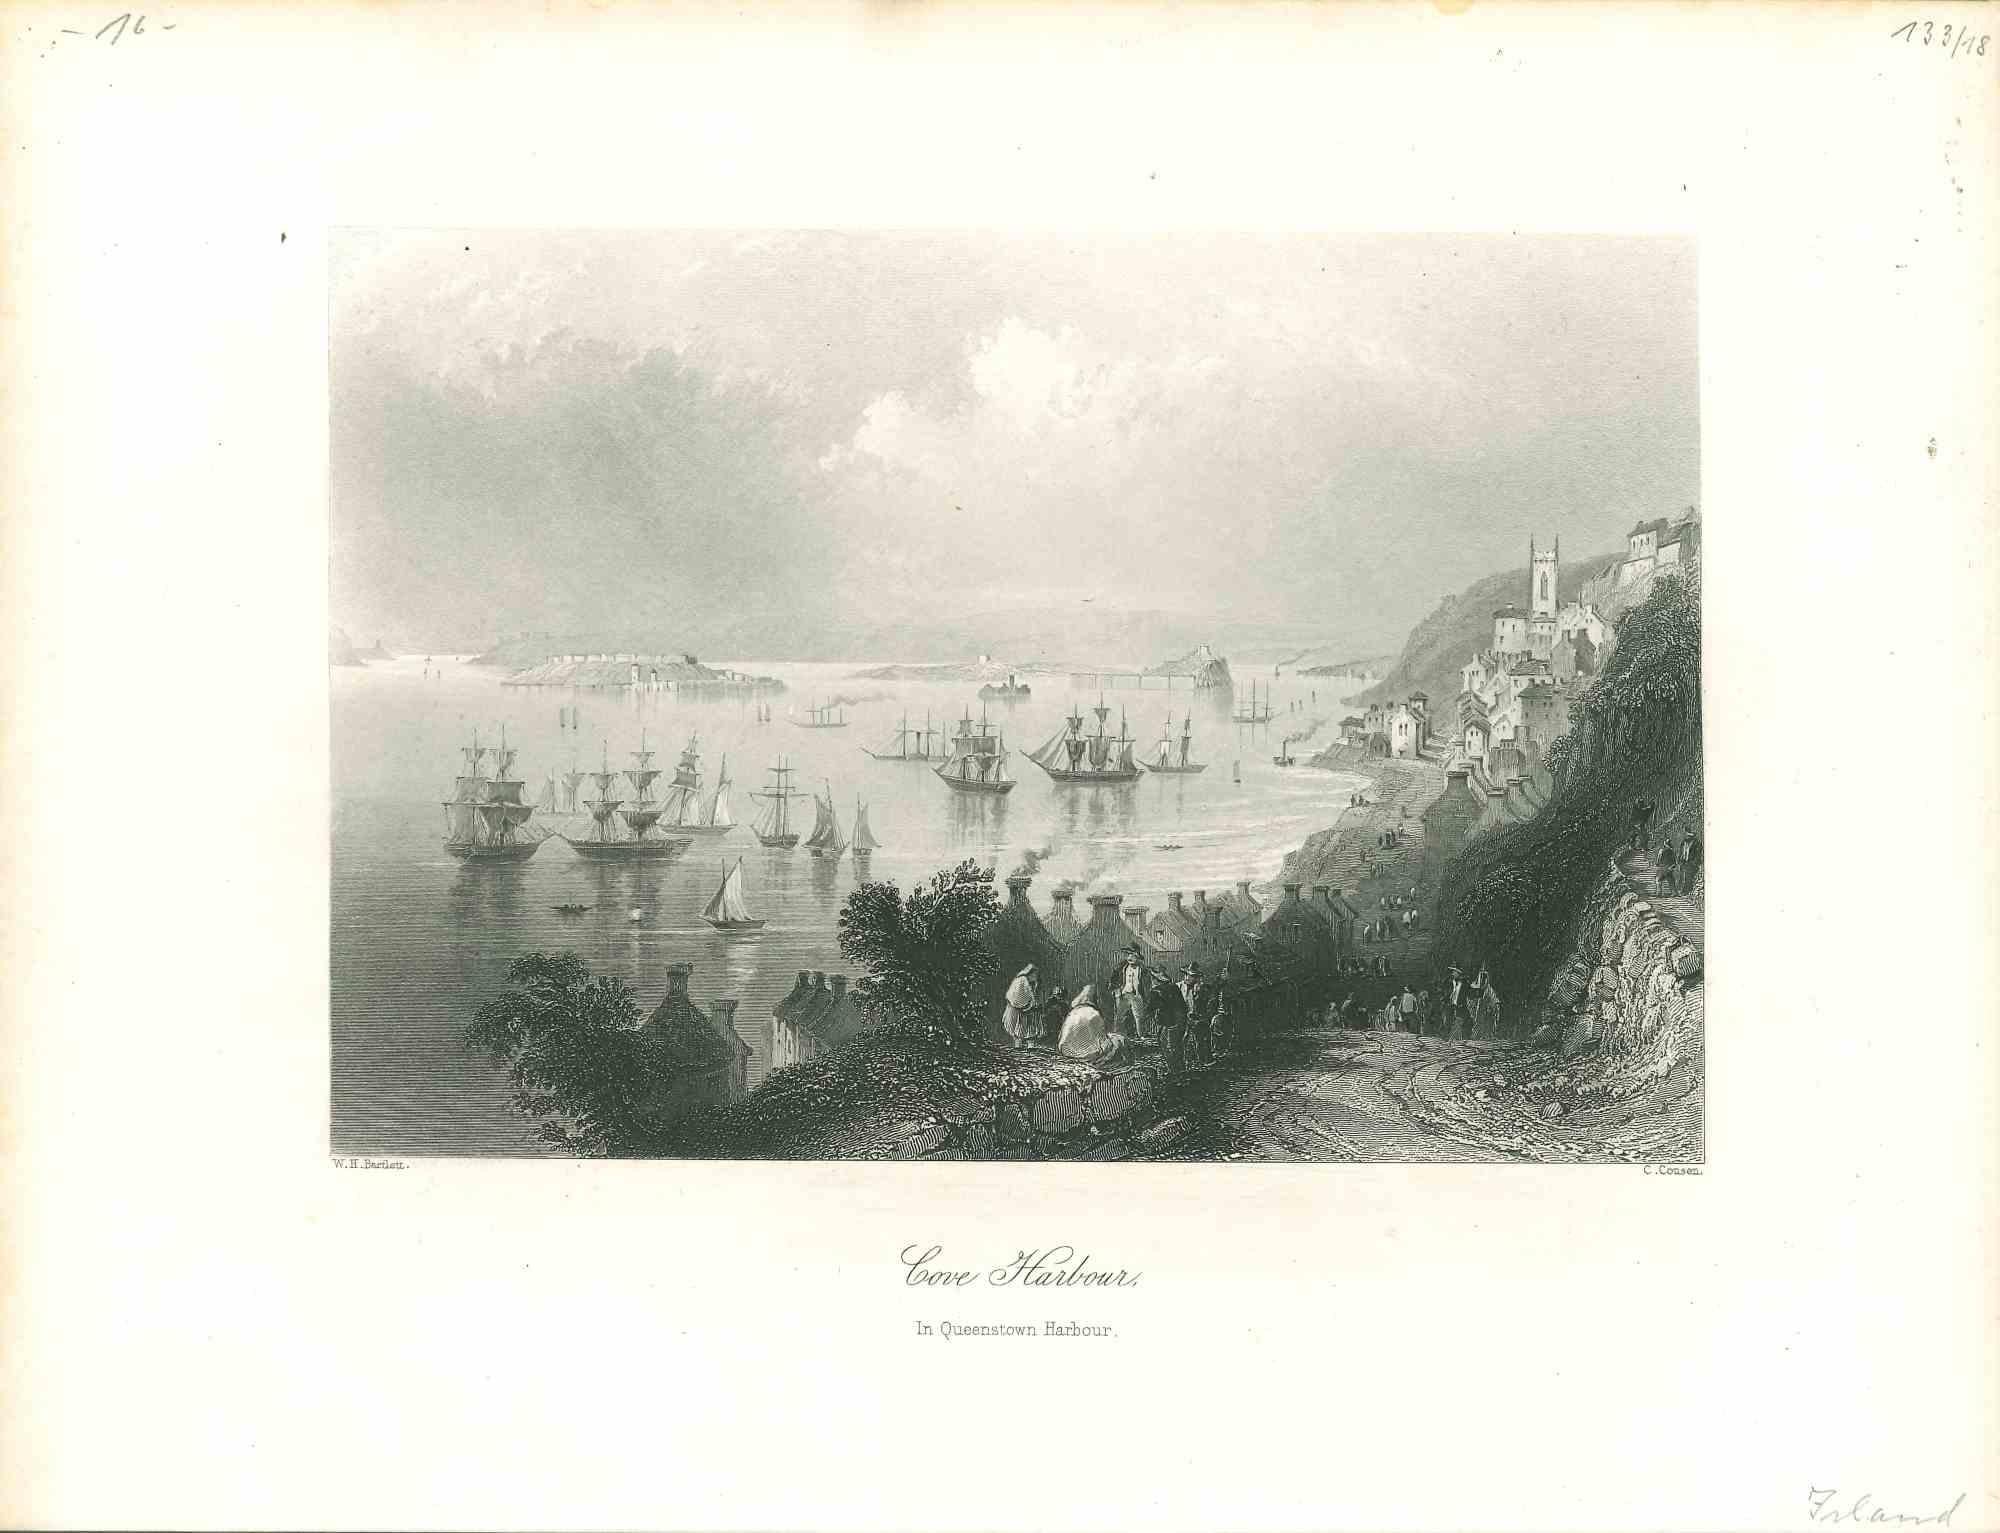 Unknown Landscape Print - Cove Harbour - Original Lithograph - Mid-19th Century